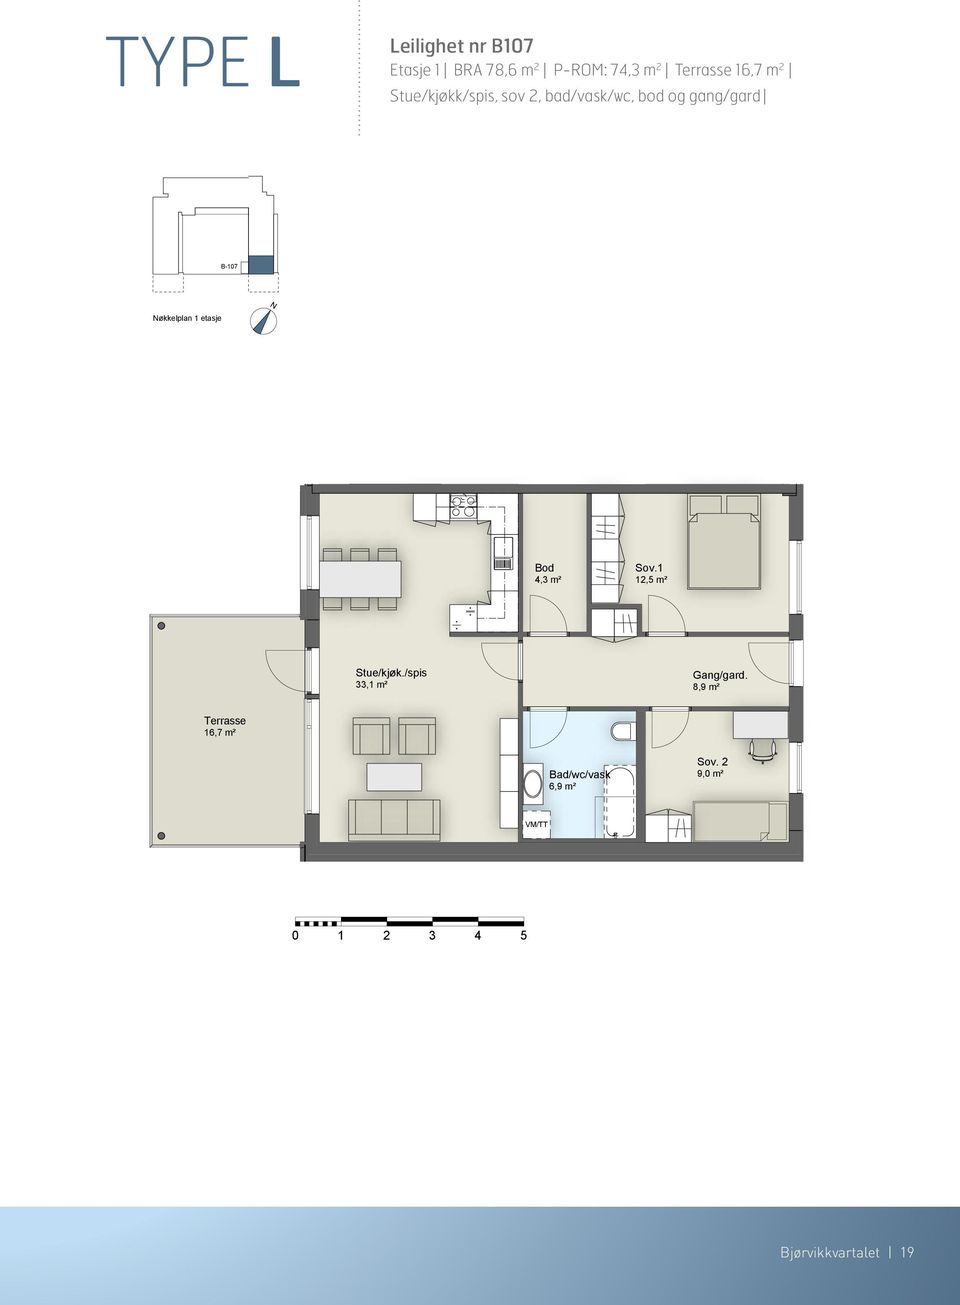 Sov.1 12,5 m² Stue/kjøk./spis 33,1 m² 8,9 m² Terrasse 16,7 m² Bad/wc/vask 6,9 m² Sov.